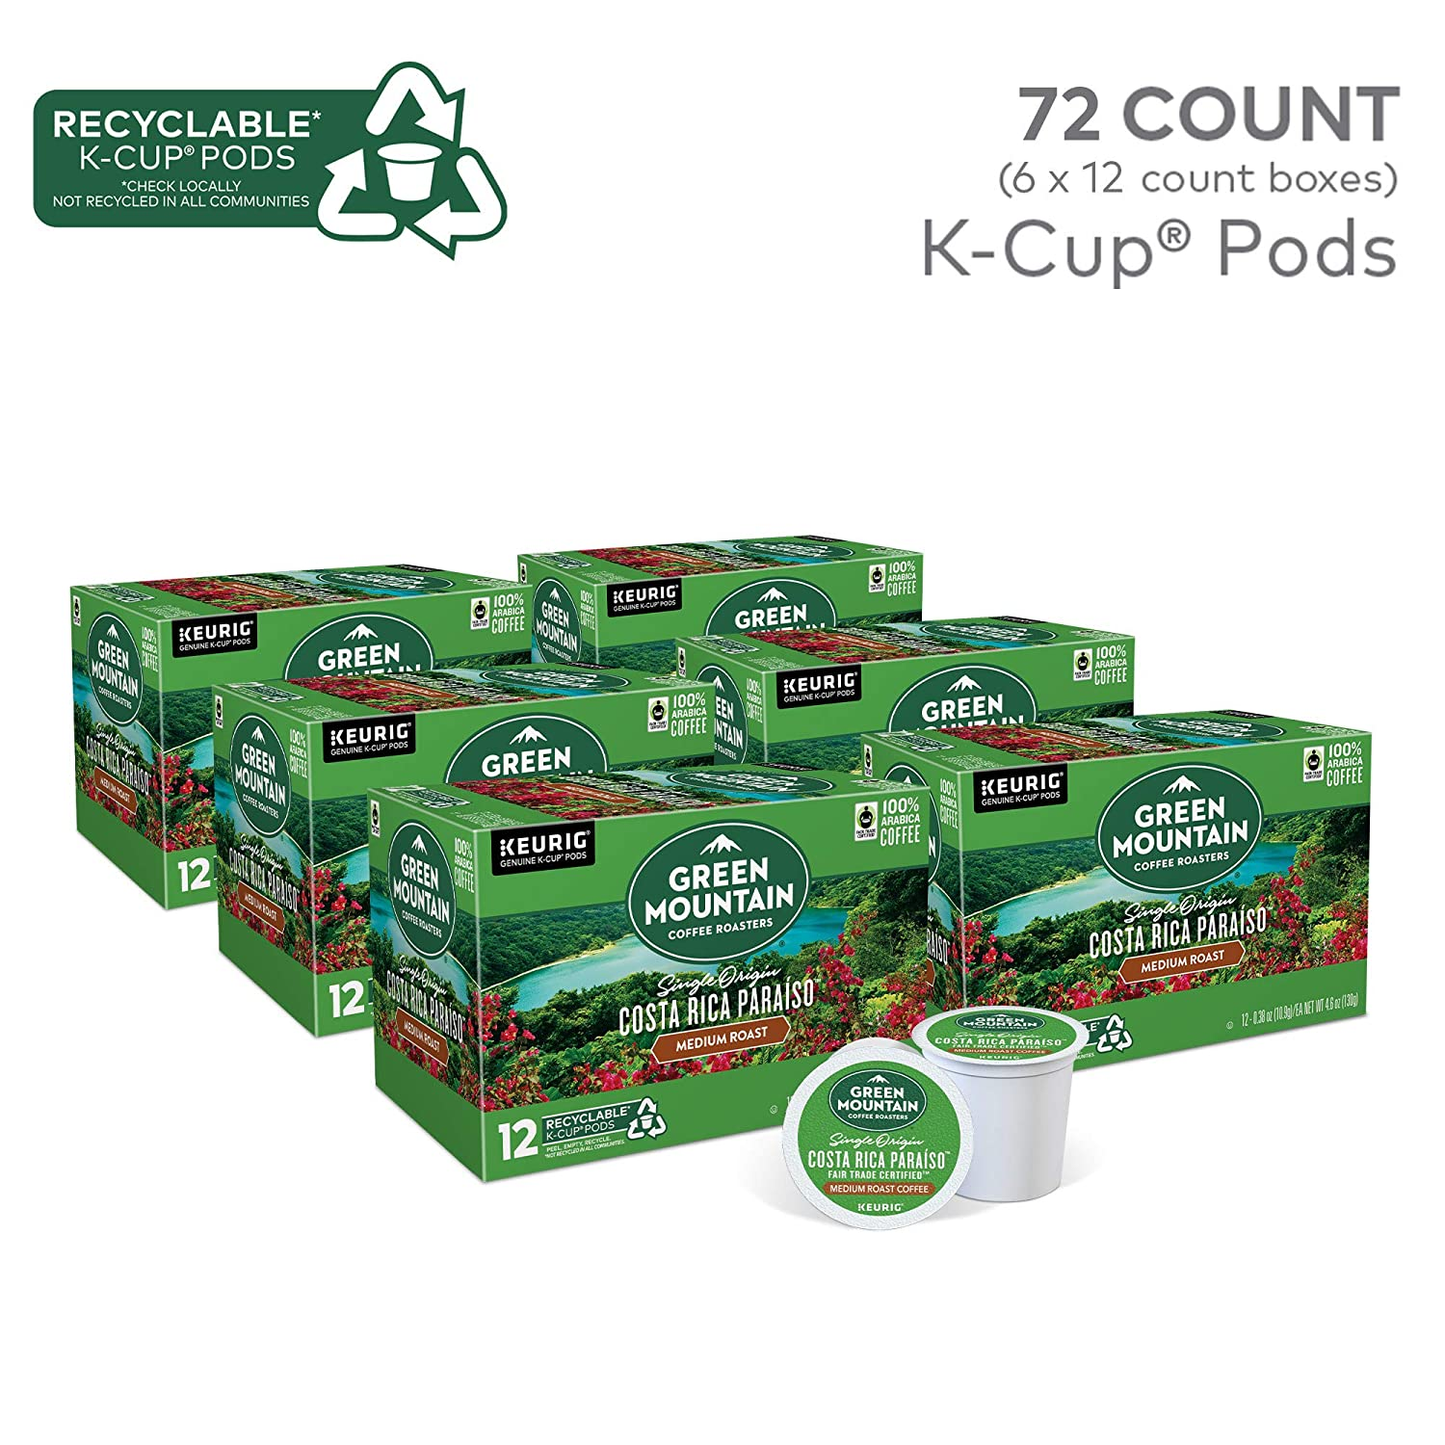 Costa Rica Paraiso, Single-Serve Keurig K-Cup Pods, Medium Roast Coffee Pods, 12 Count (Pack of 6)